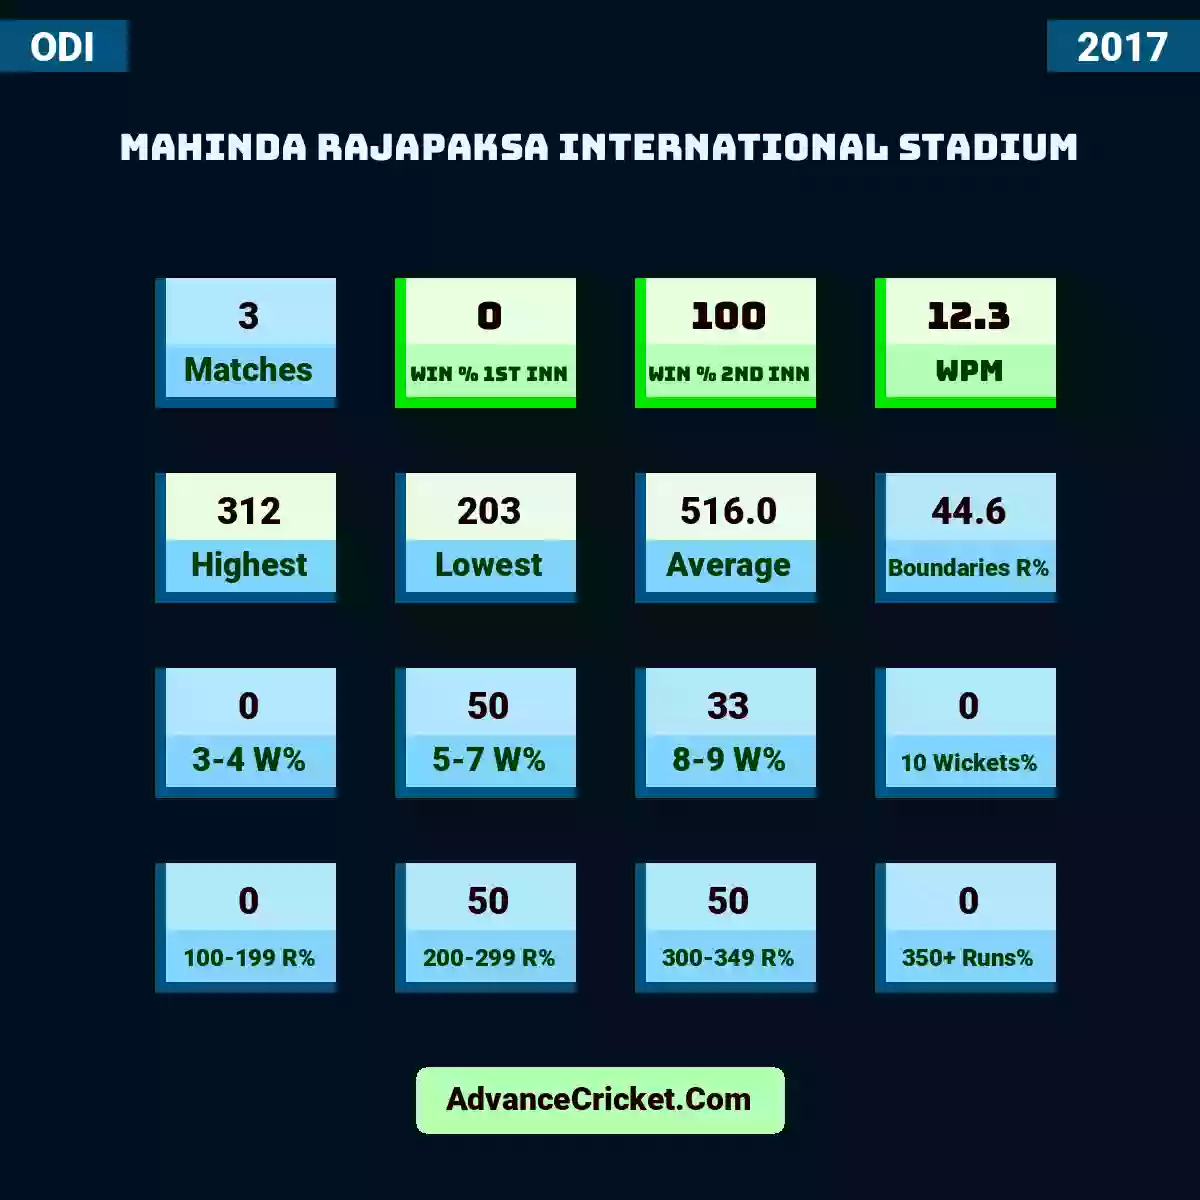 Image showing Mahinda Rajapaksa International Stadium with Matches: 3, Win % 1st Inn: 0, Win % 2nd Inn: 100, WPM: 12.3, Highest: 312, Lowest: 203, Average: 516.0, Boundaries R%: 44.6, 3-4 W%: 0, 5-7 W%: 50, 8-9 W%: 33, 10 Wickets%: 0, 100-199 R%: 0, 200-299 R%: 50, 300-349 R%: 50, 350+ Runs%: 0.